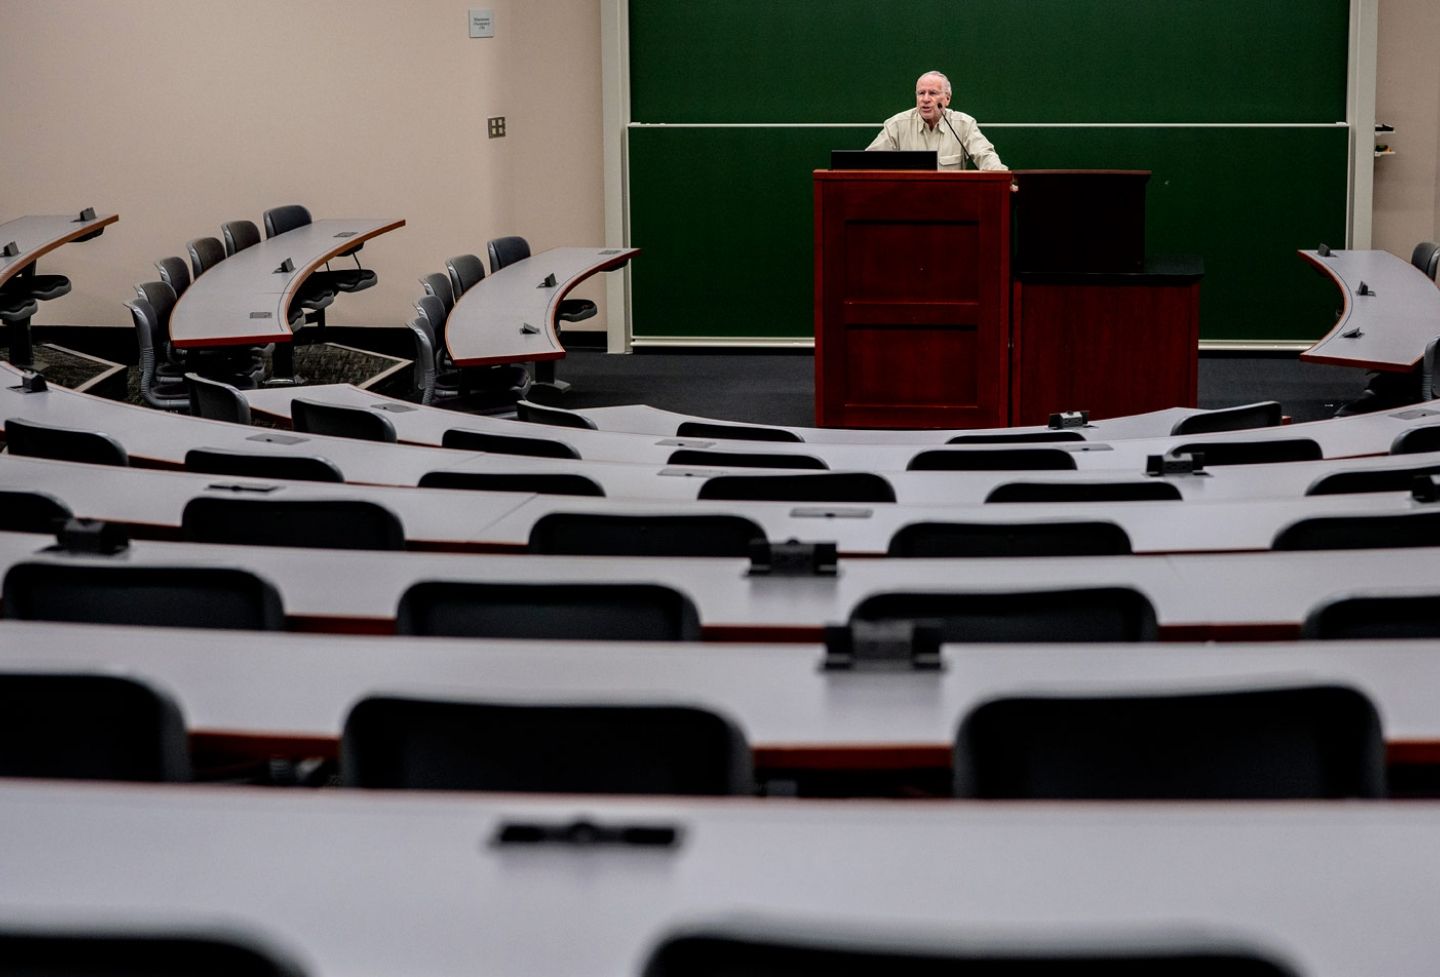 Professor Fred Schauer teaches in an empty classroom